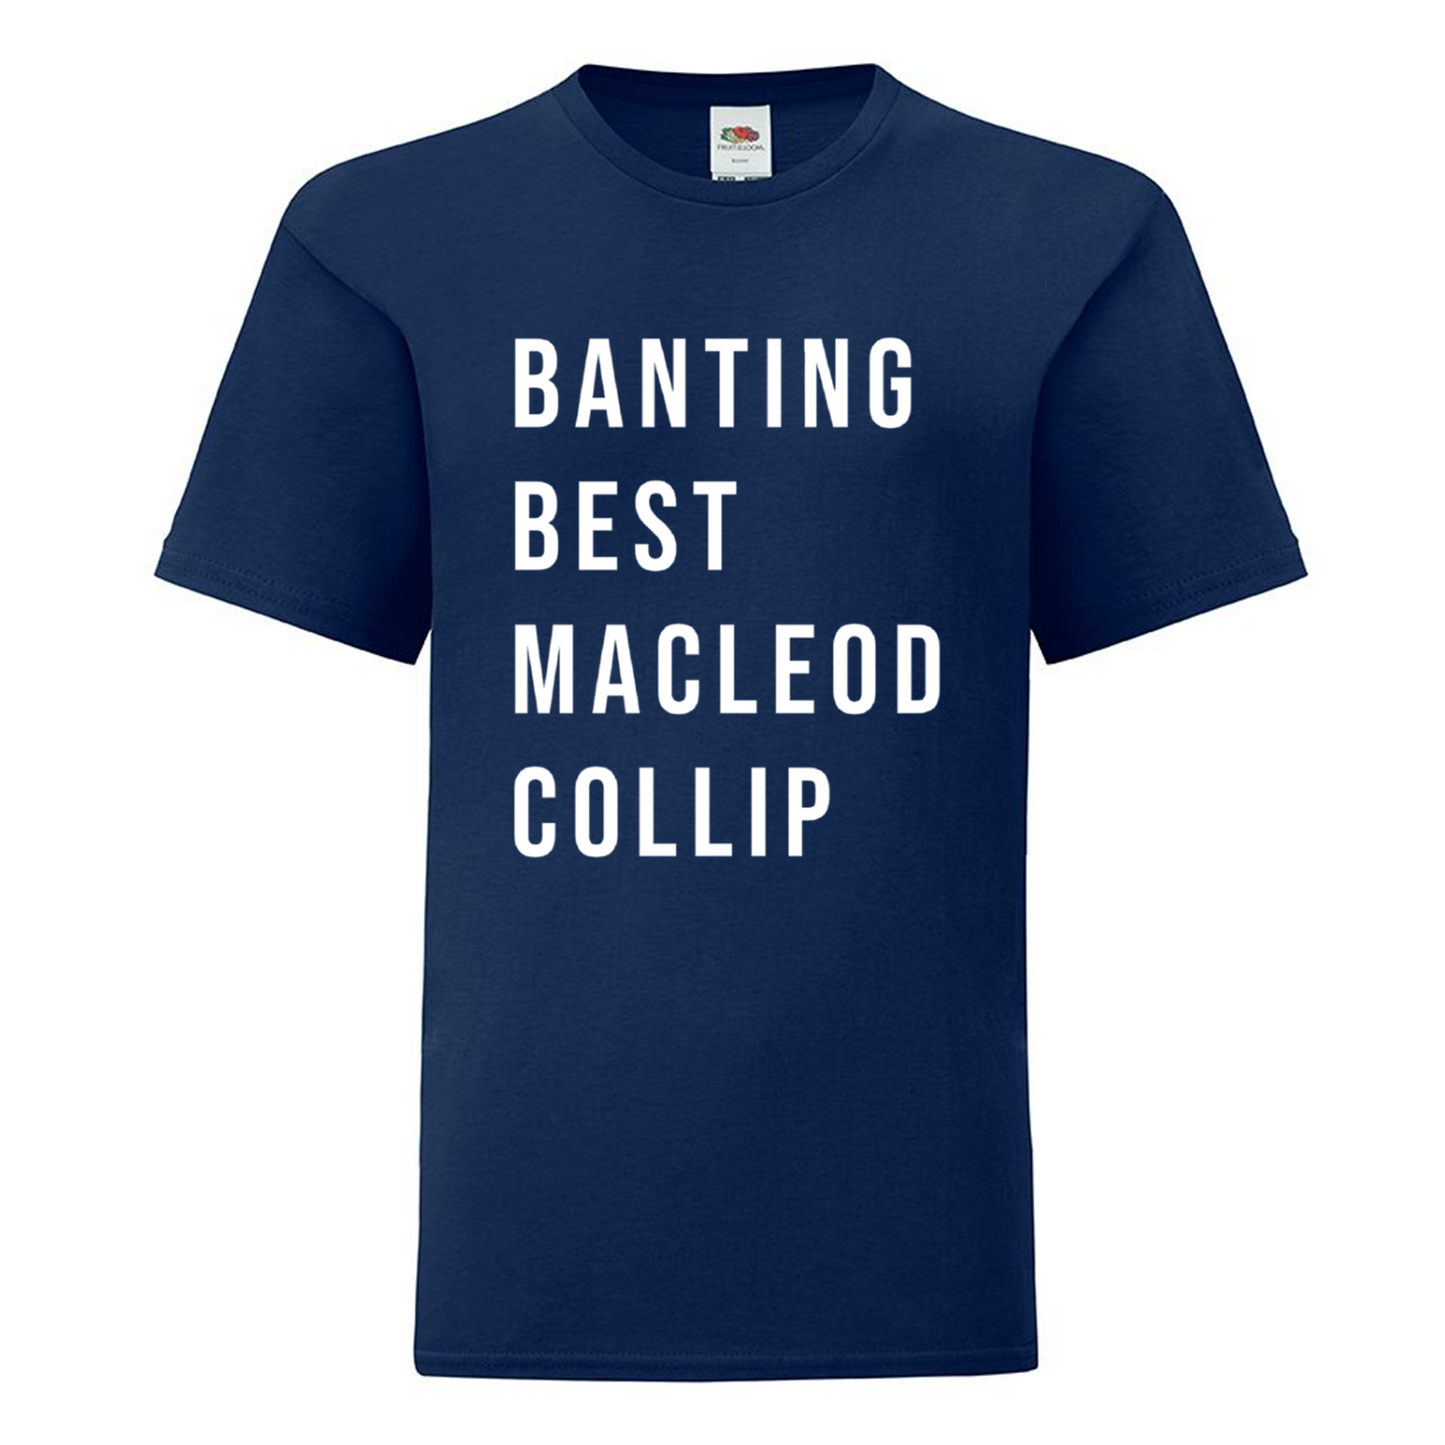 Banting, Best, Macleod & Collip Kids T Shirt